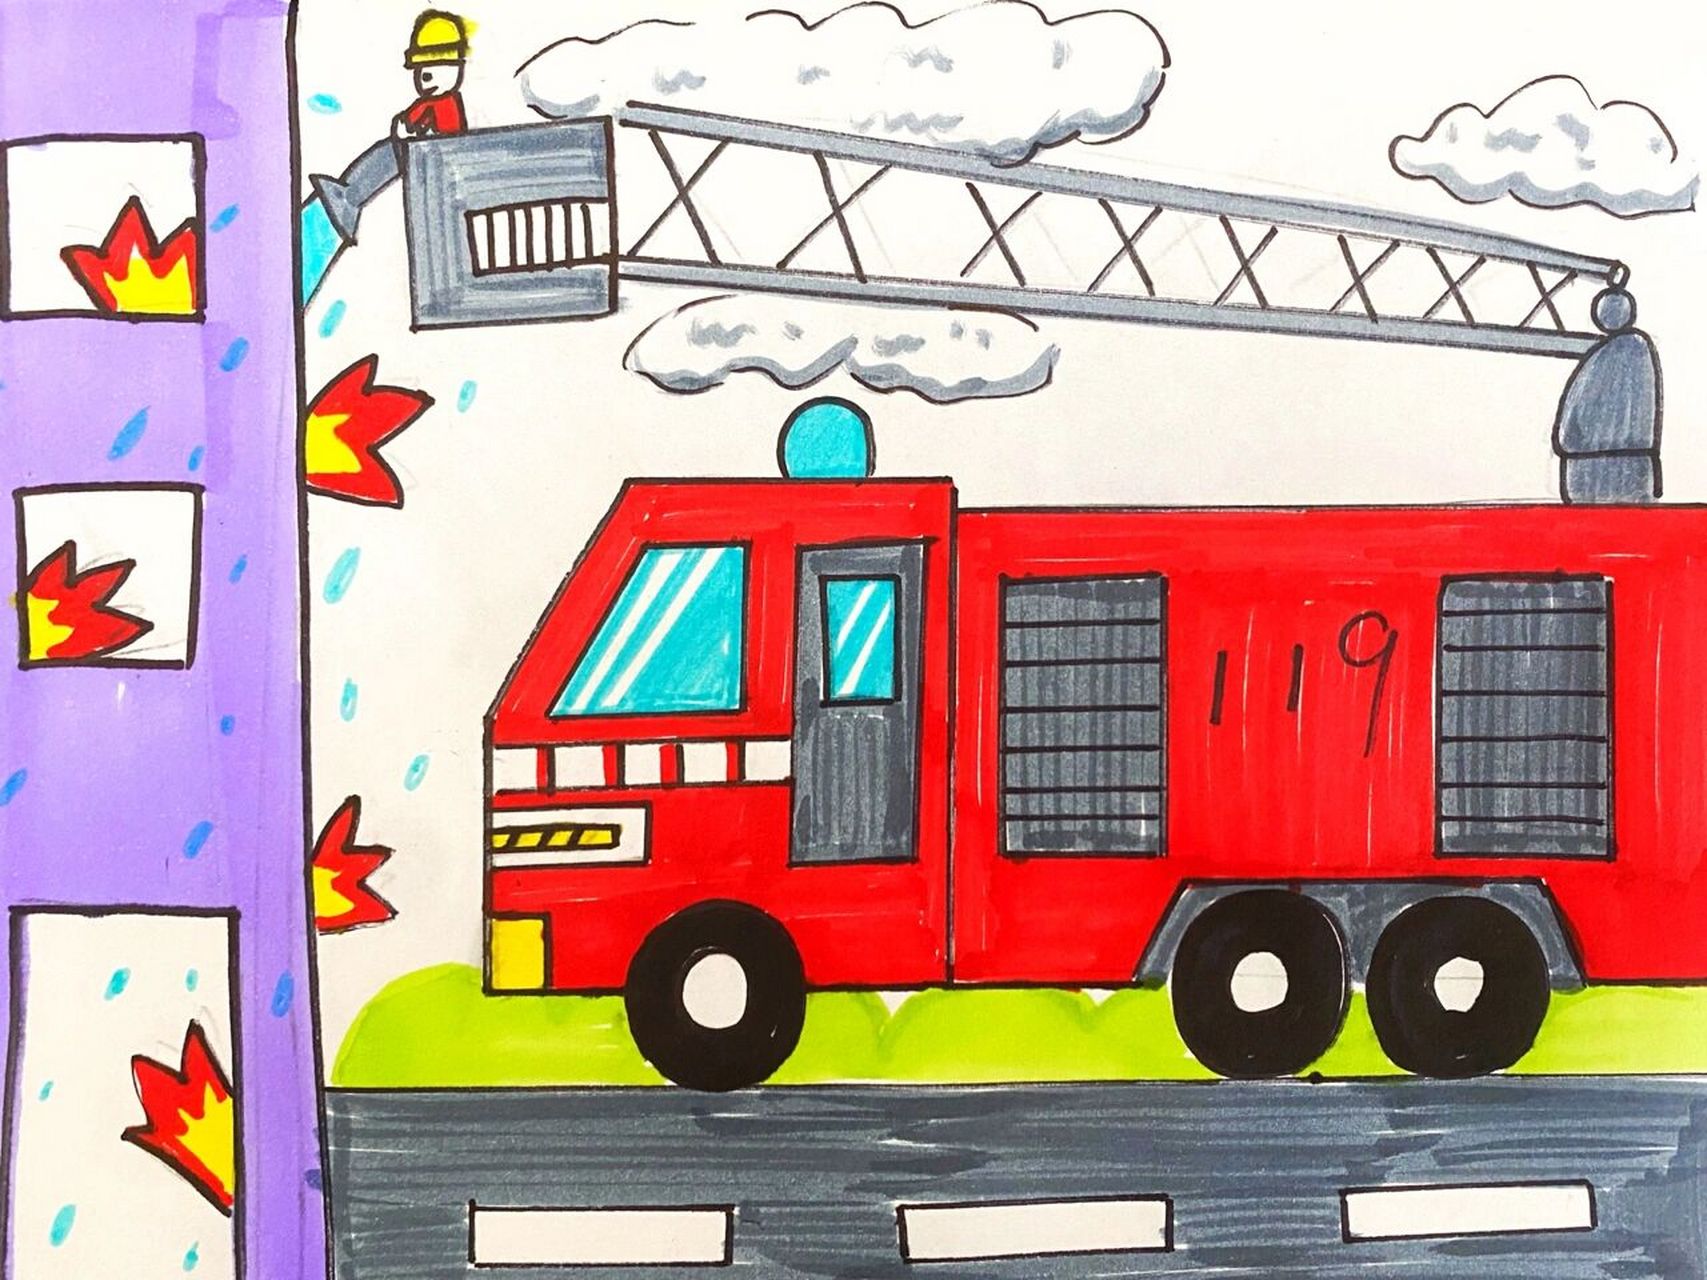 复杂的消防车怎么画图片